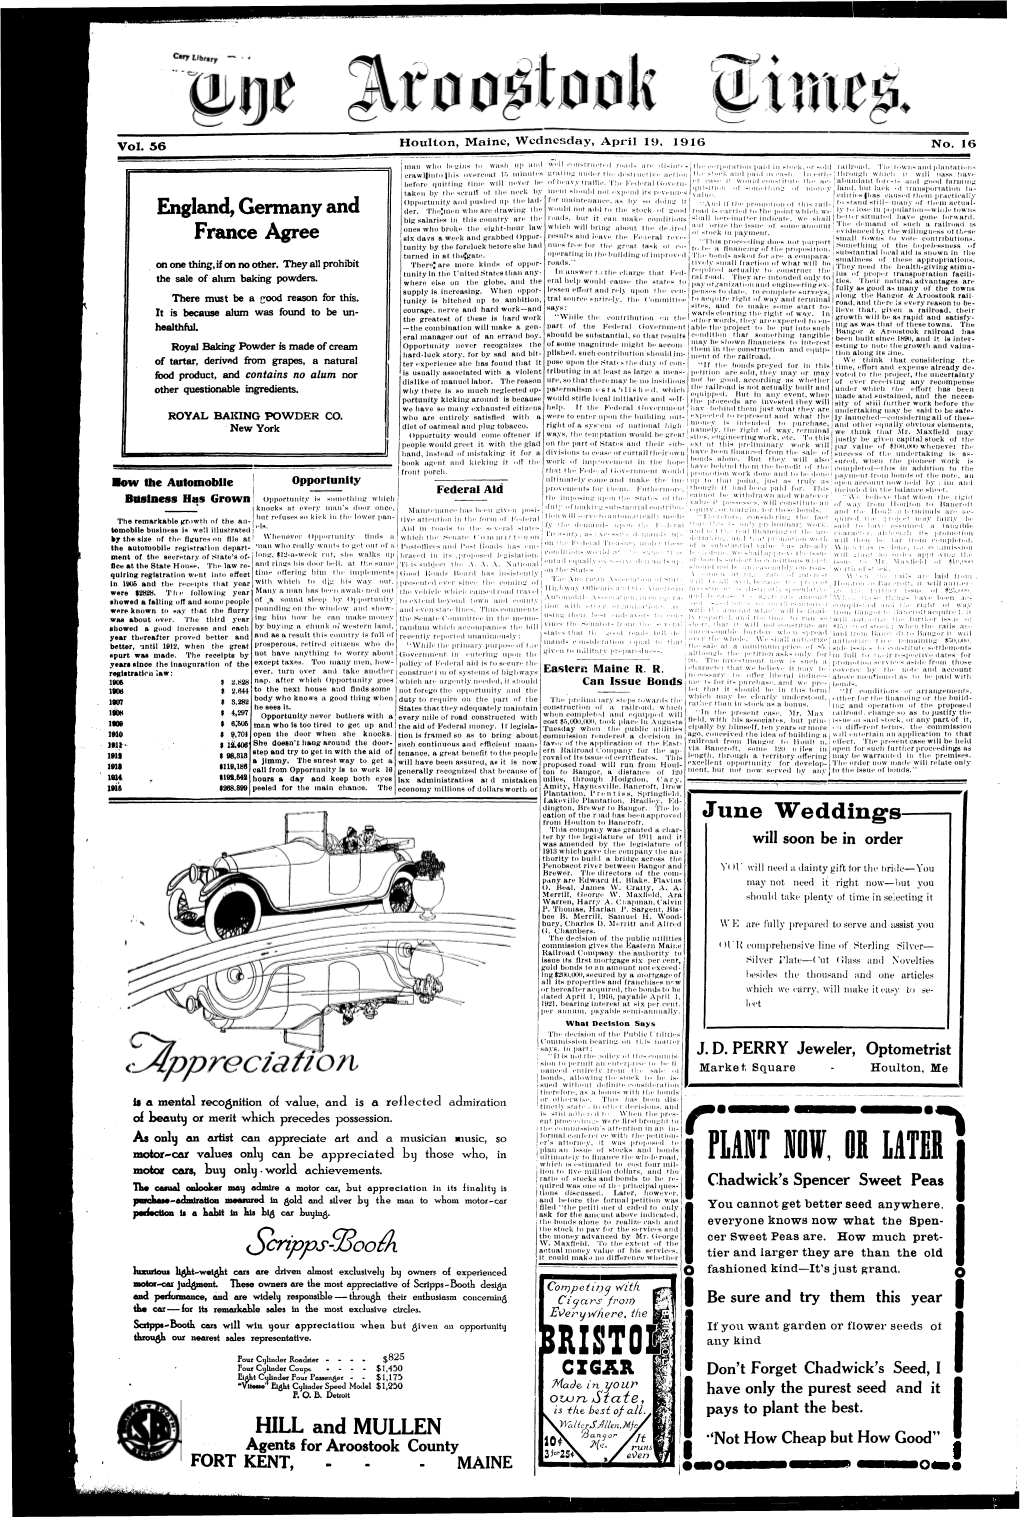 The Aroostook Times, April 19, 1916